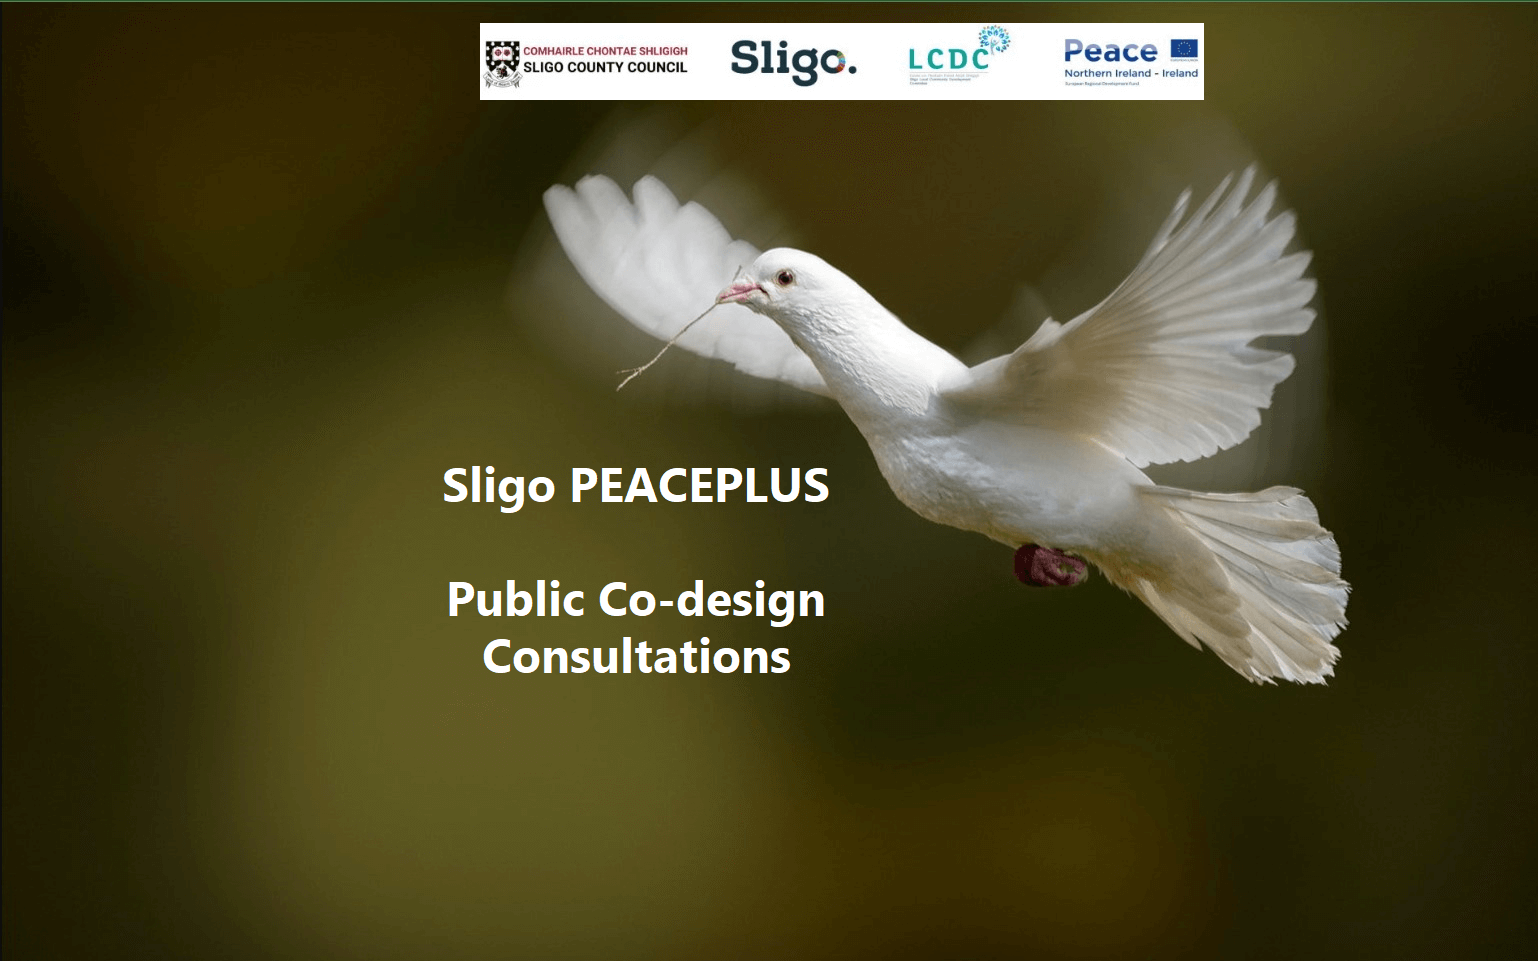 Sligo PEACEPLUS – Have Your Say - Public Co-design Meetings Announced